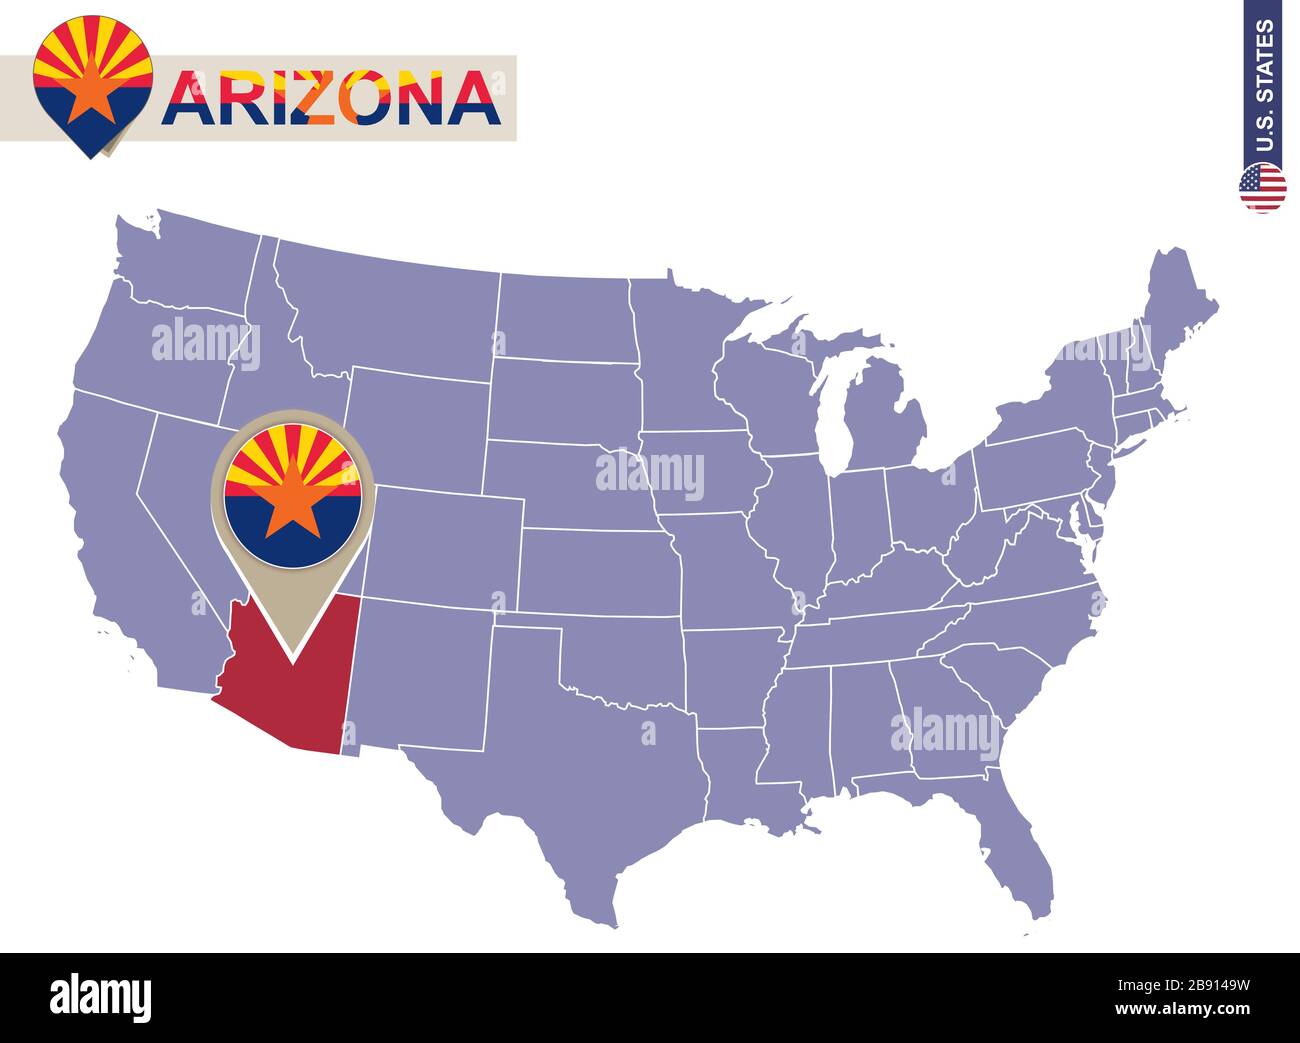 Arizona State on USA Map. Arizona flag and map. US States. Stock Vector